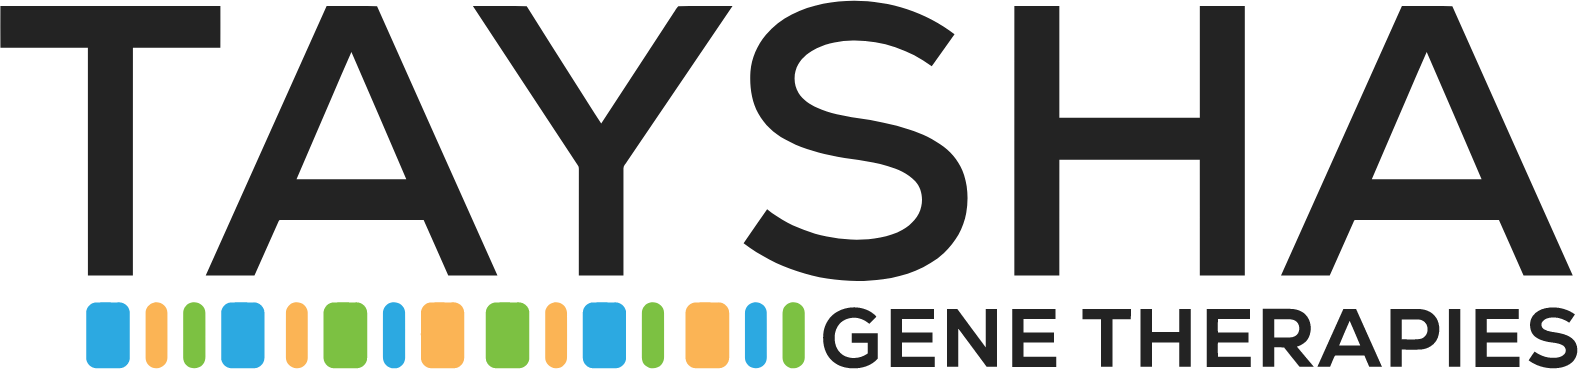 Taysha Gene Therapies logo large (transparent PNG)